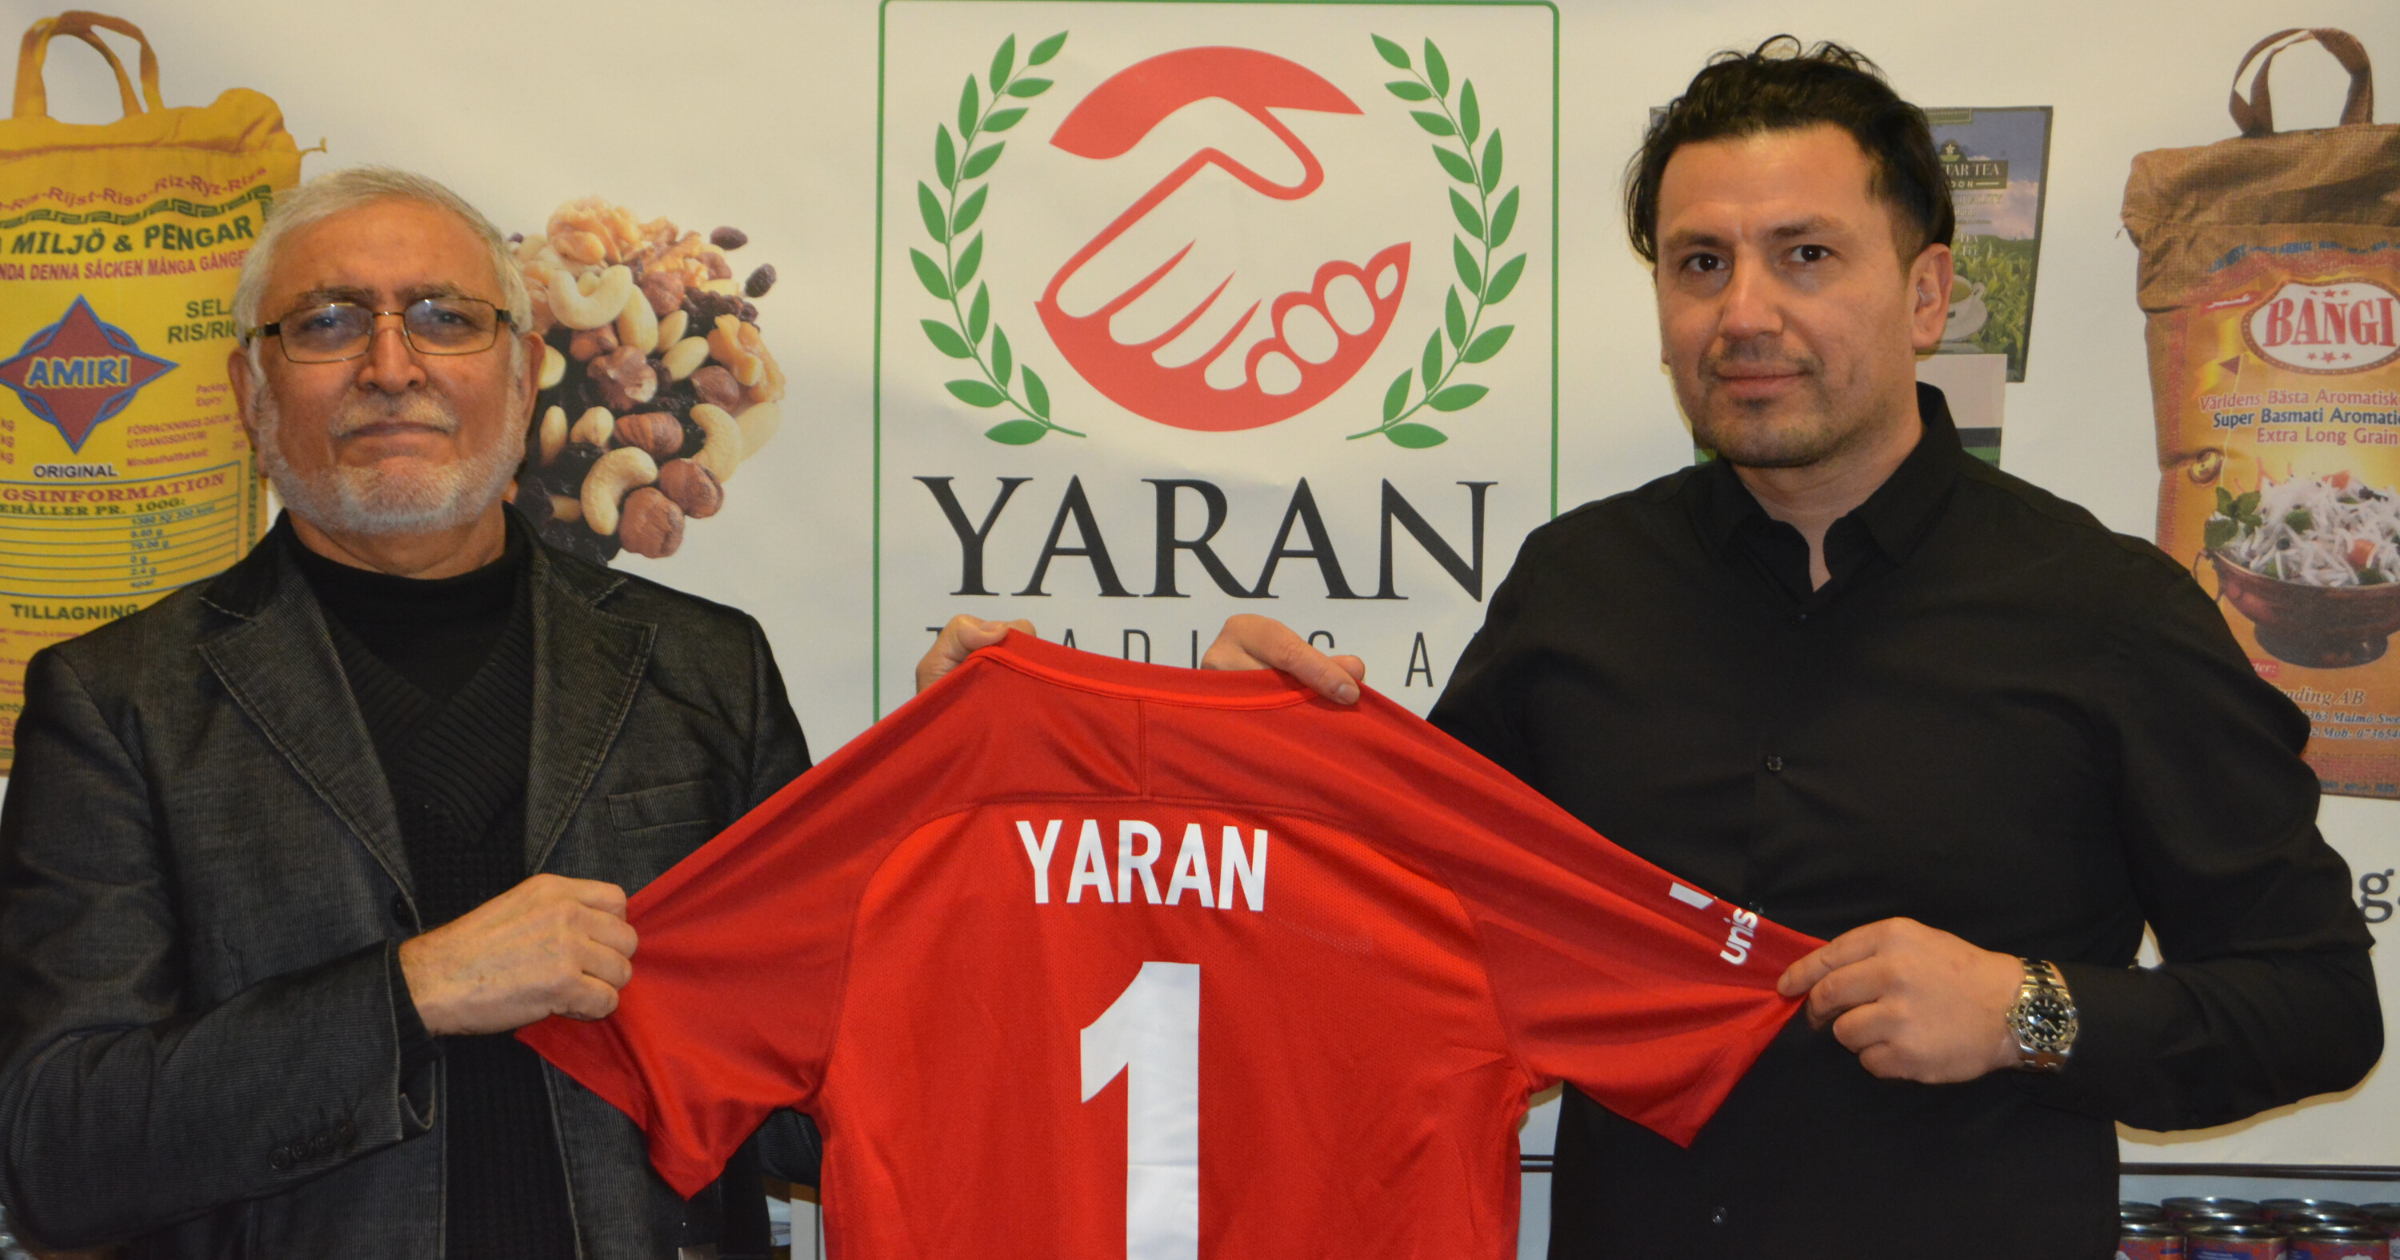 Yaran Trading - Ariana FC